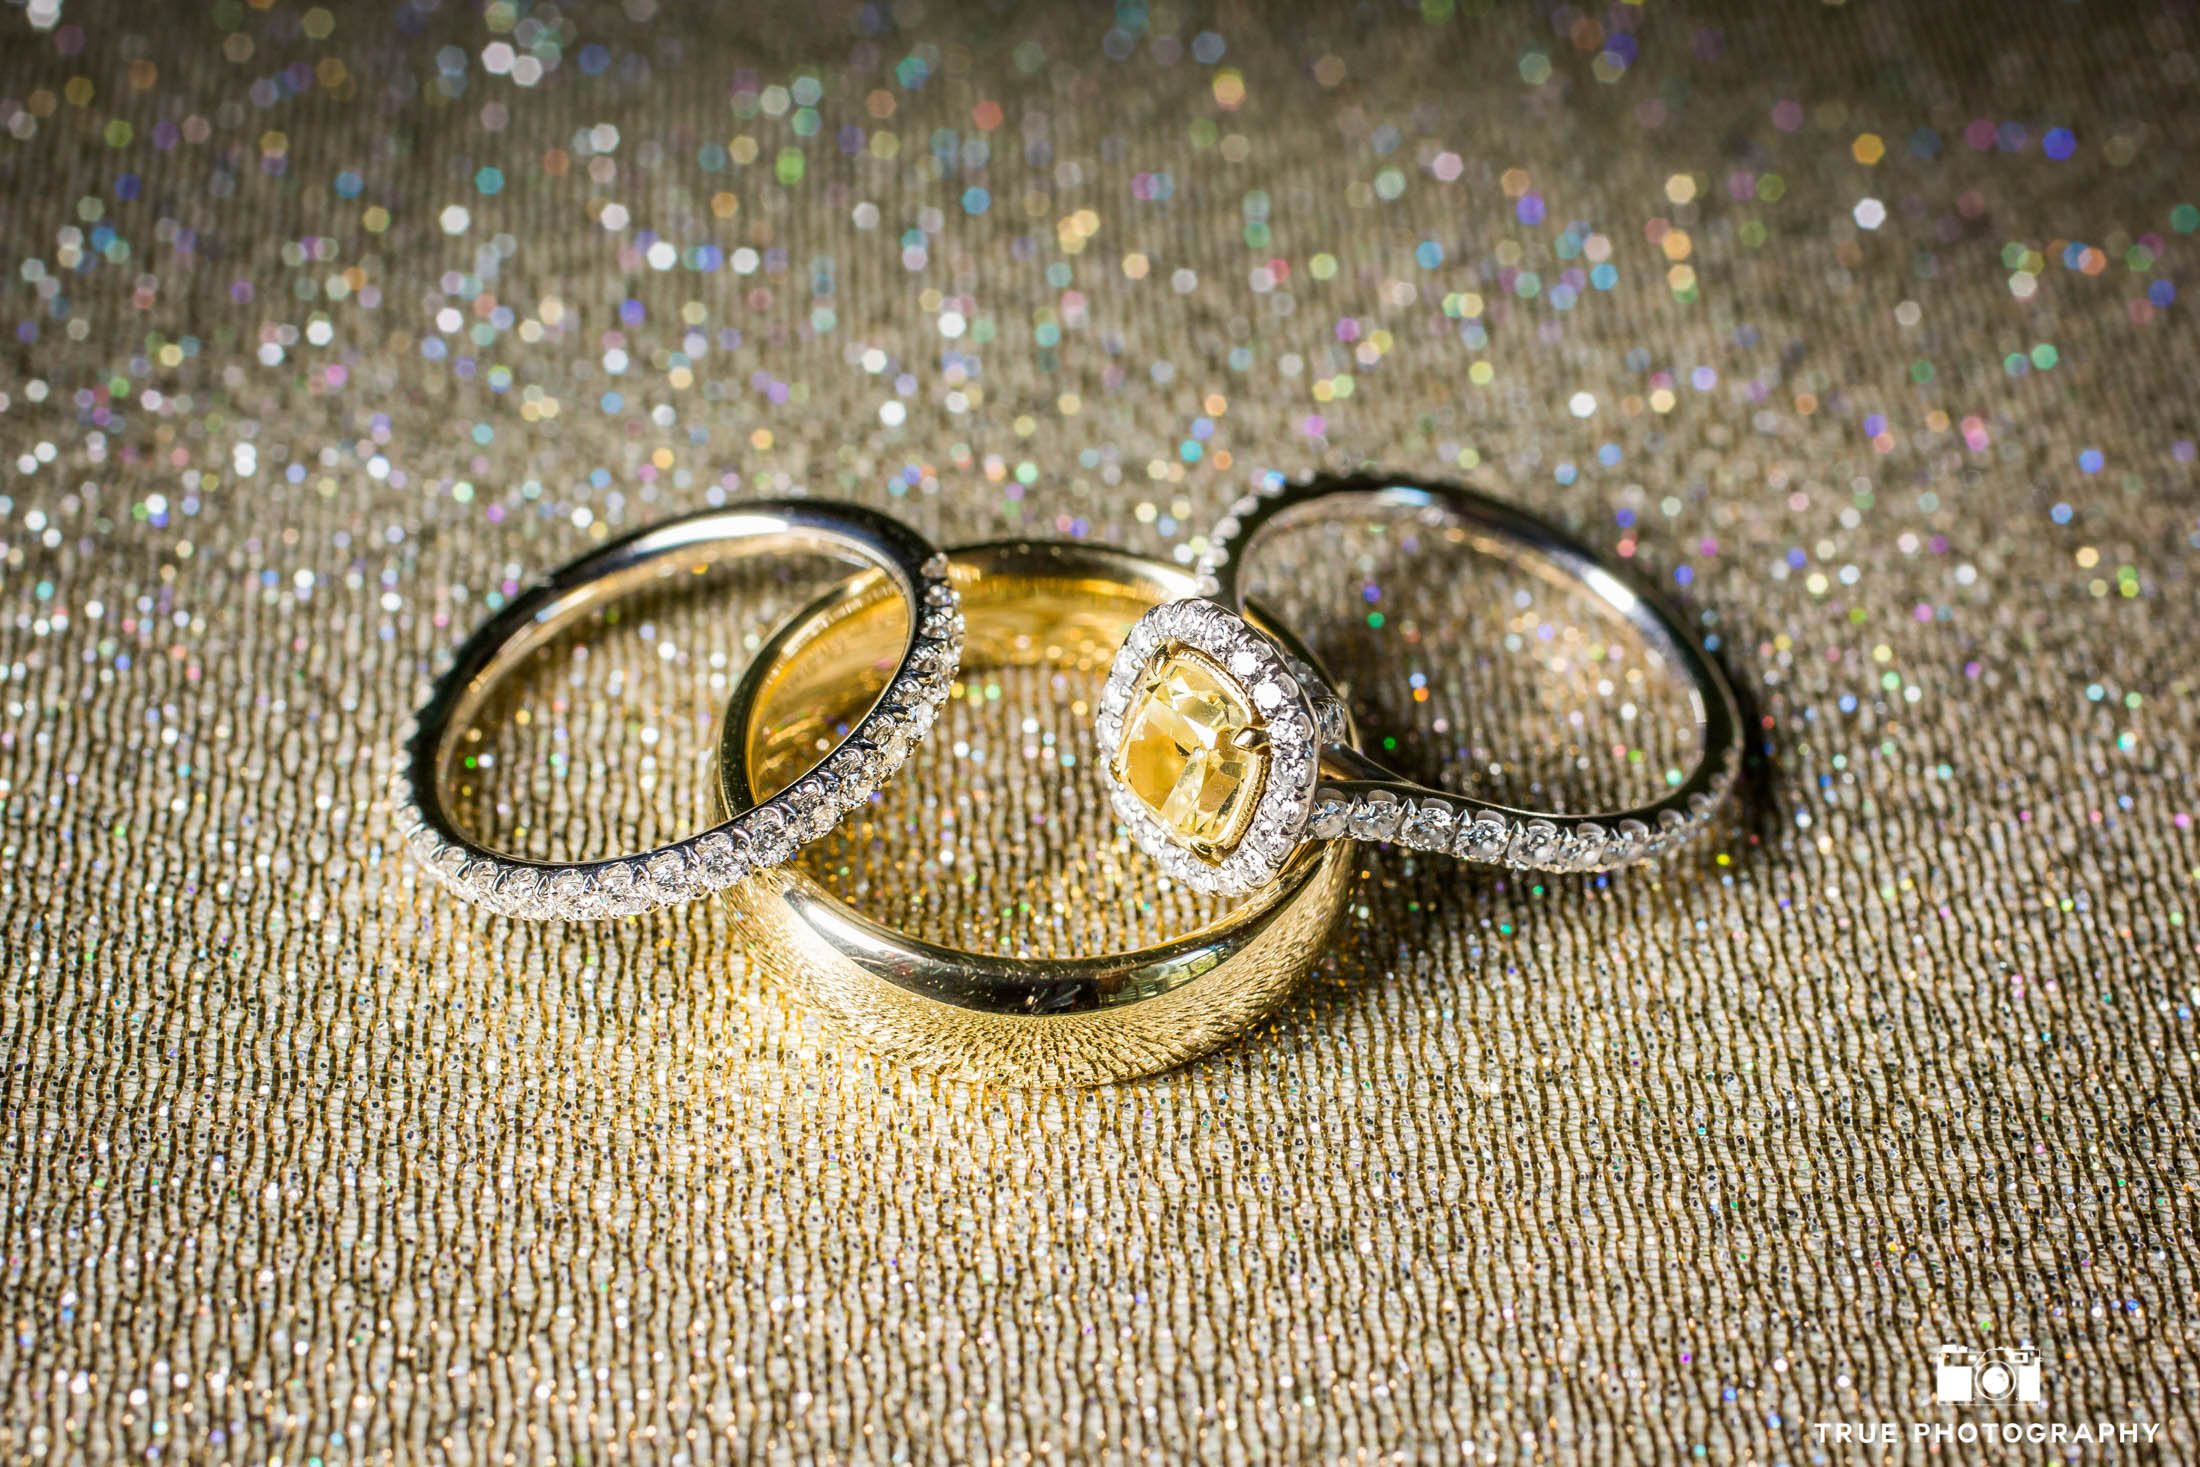 Close up shot of diamond ring and wedding bands